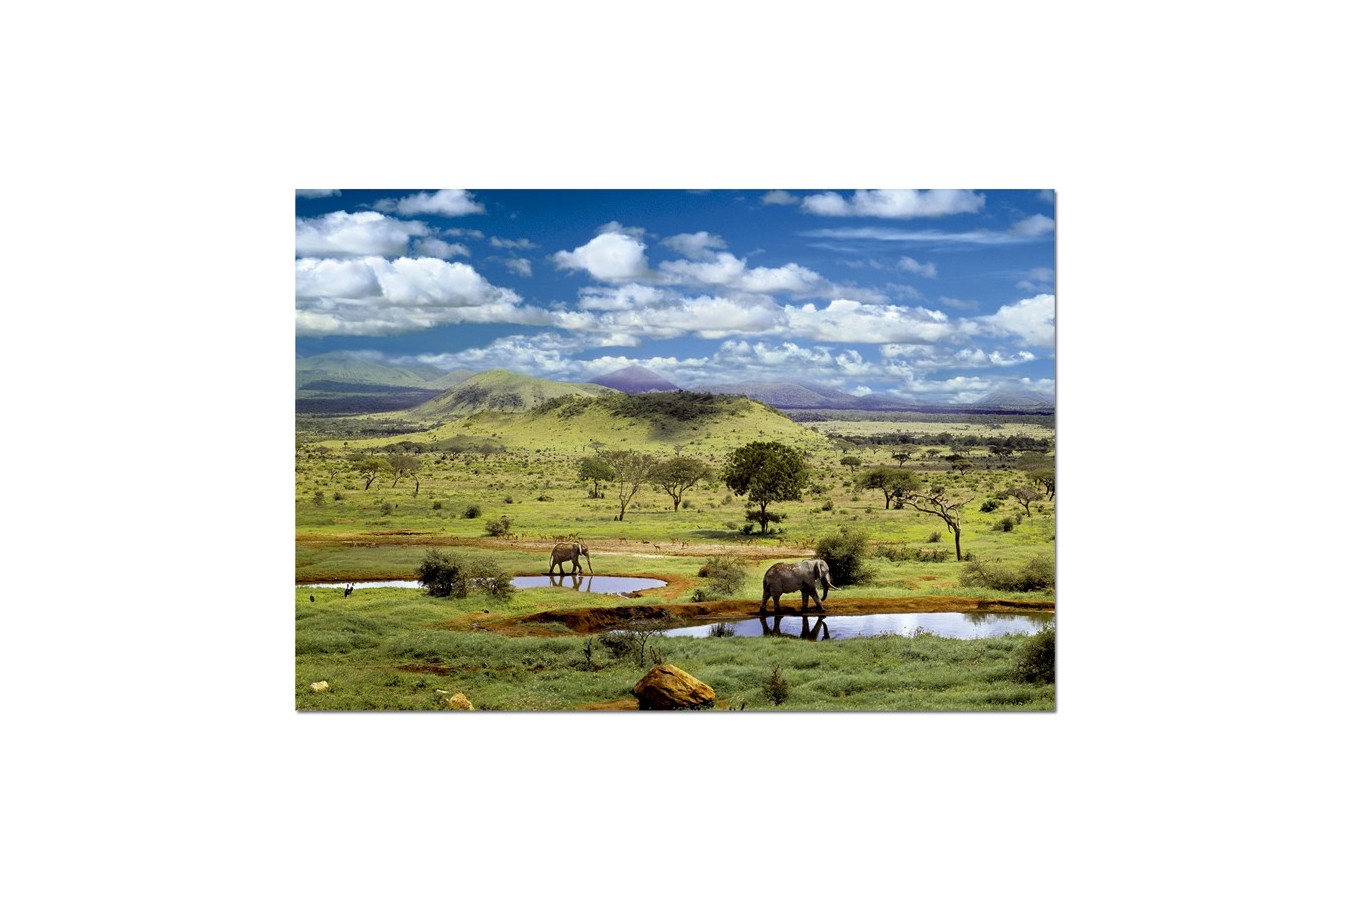 Puzzle Educa - Tsavo National Park, Kenya, 500 piese (15152)